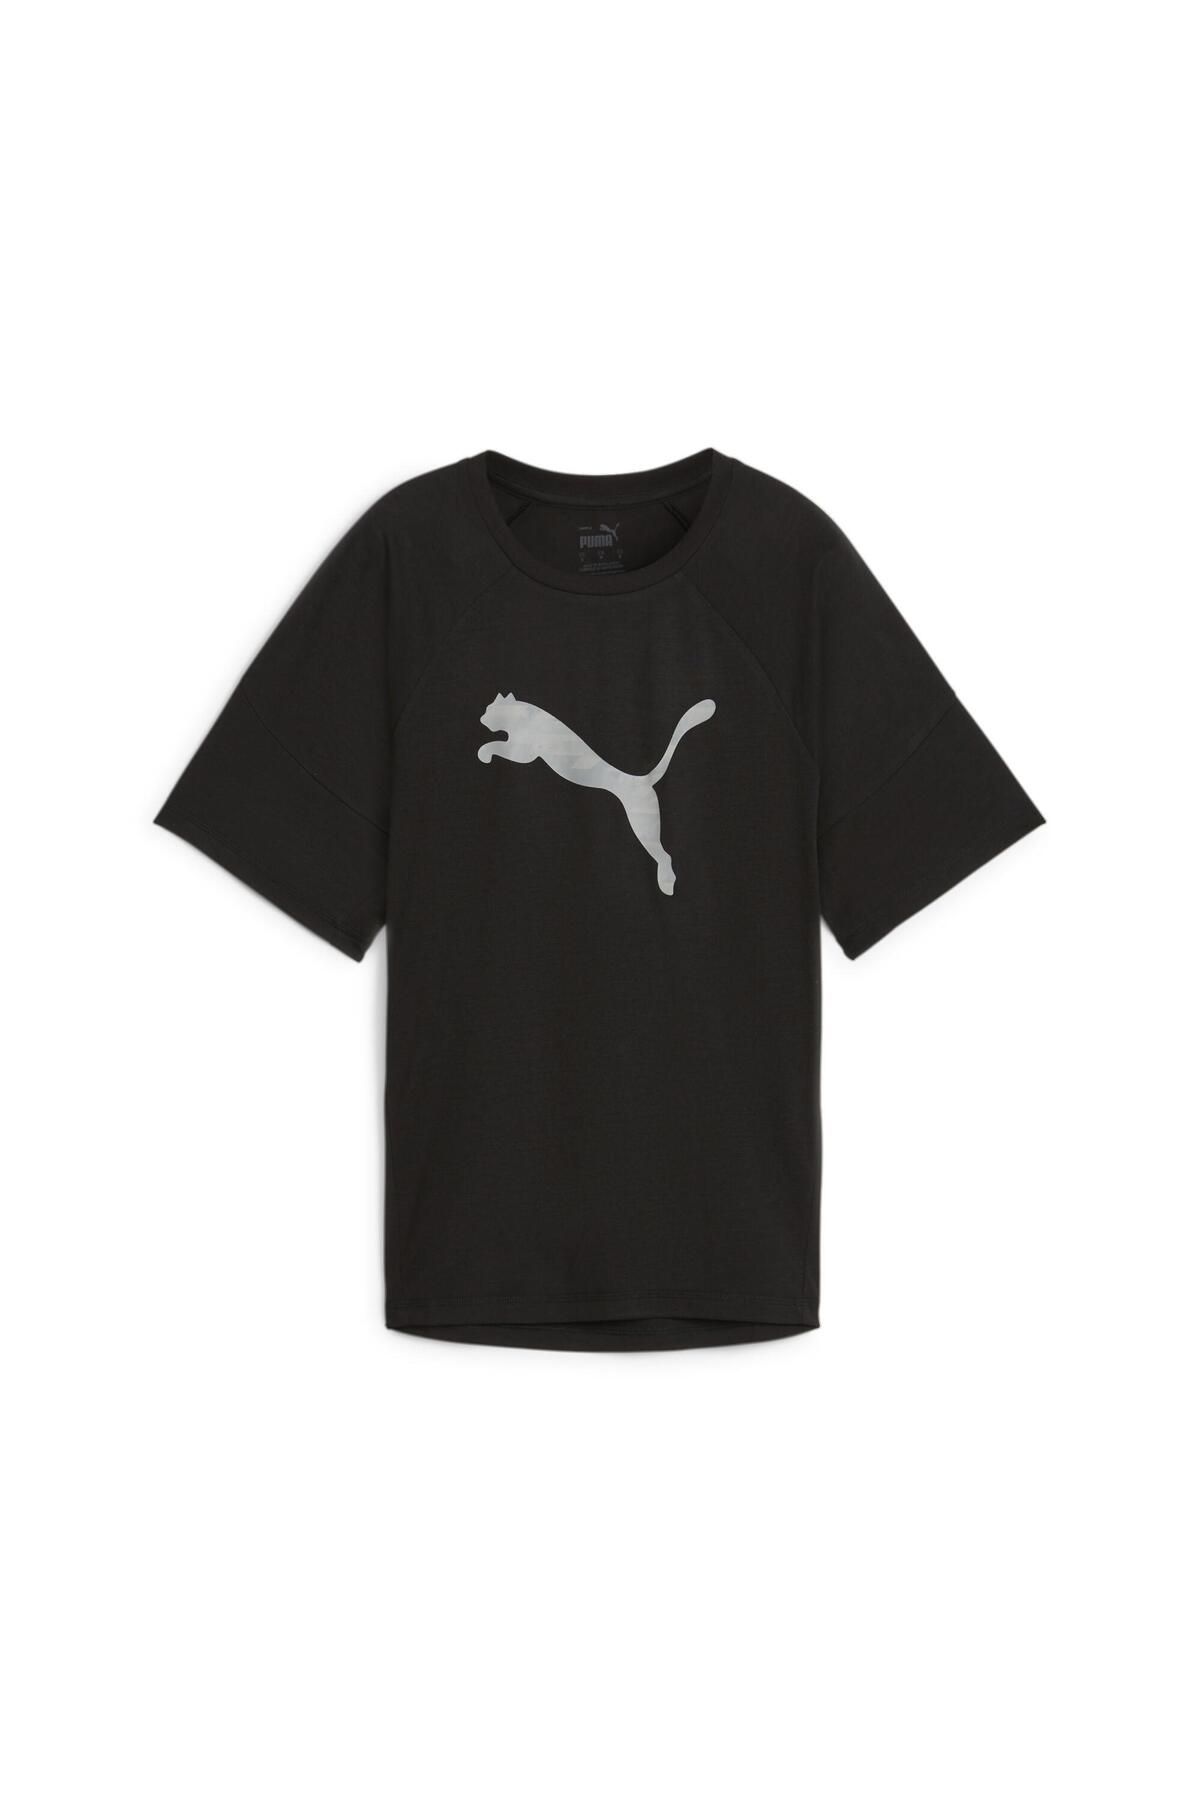 Puma Evostripe Graphic Tee Kadın T-shirt